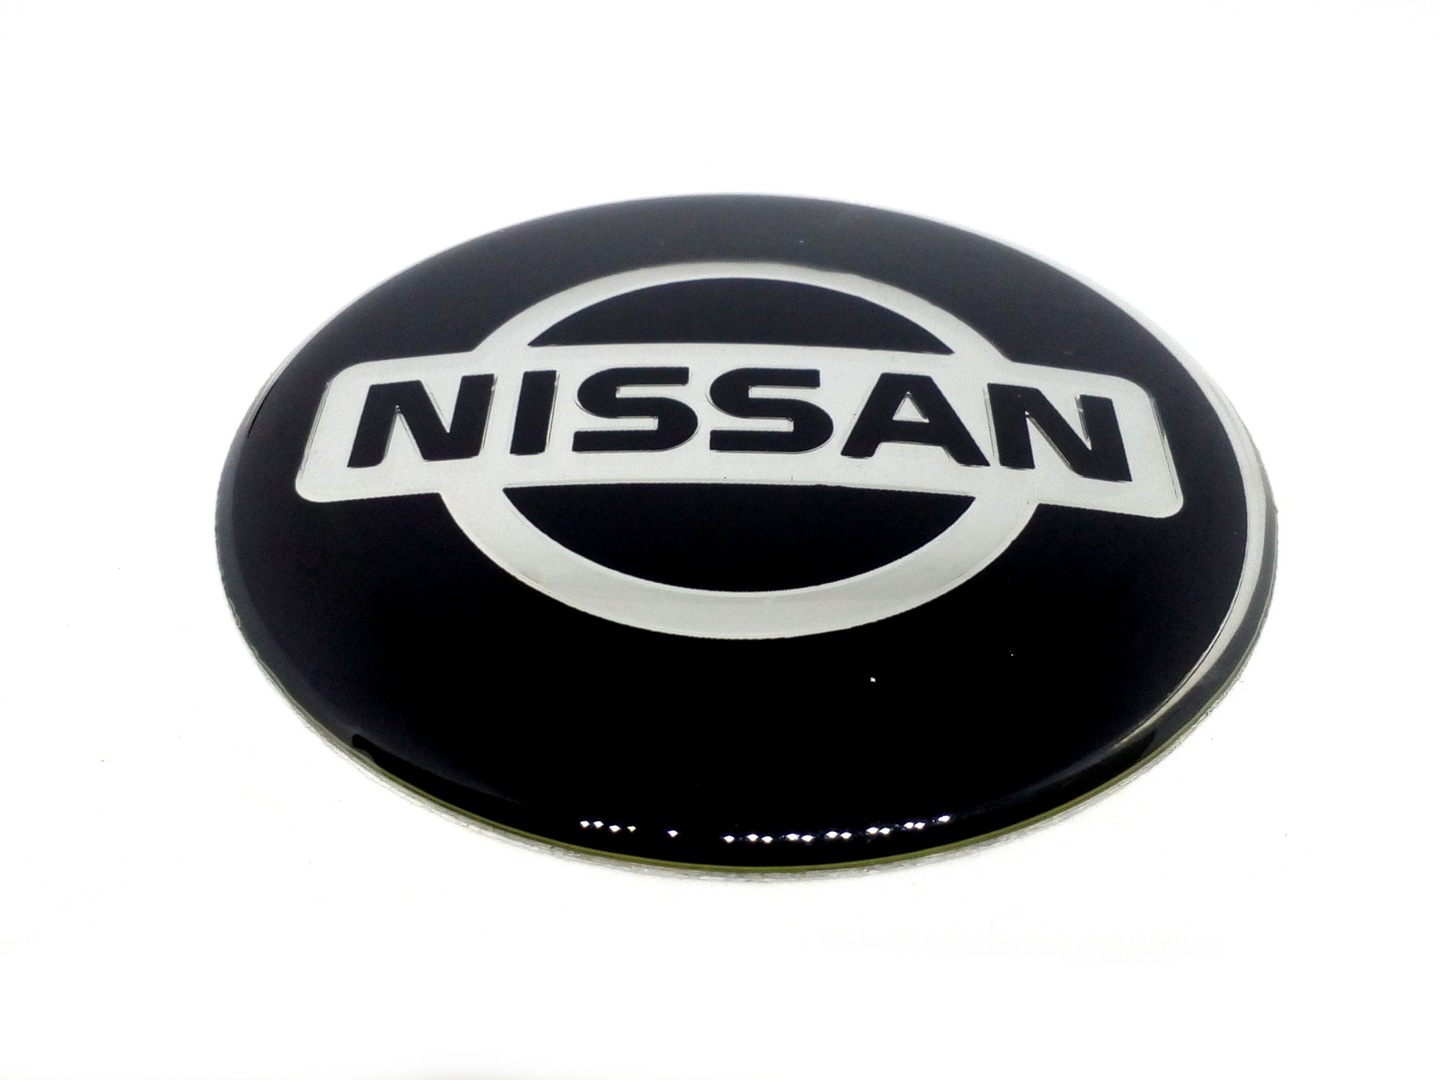 NISSAN naklejka emblemat felga kołpak inne 64mm 7183407956